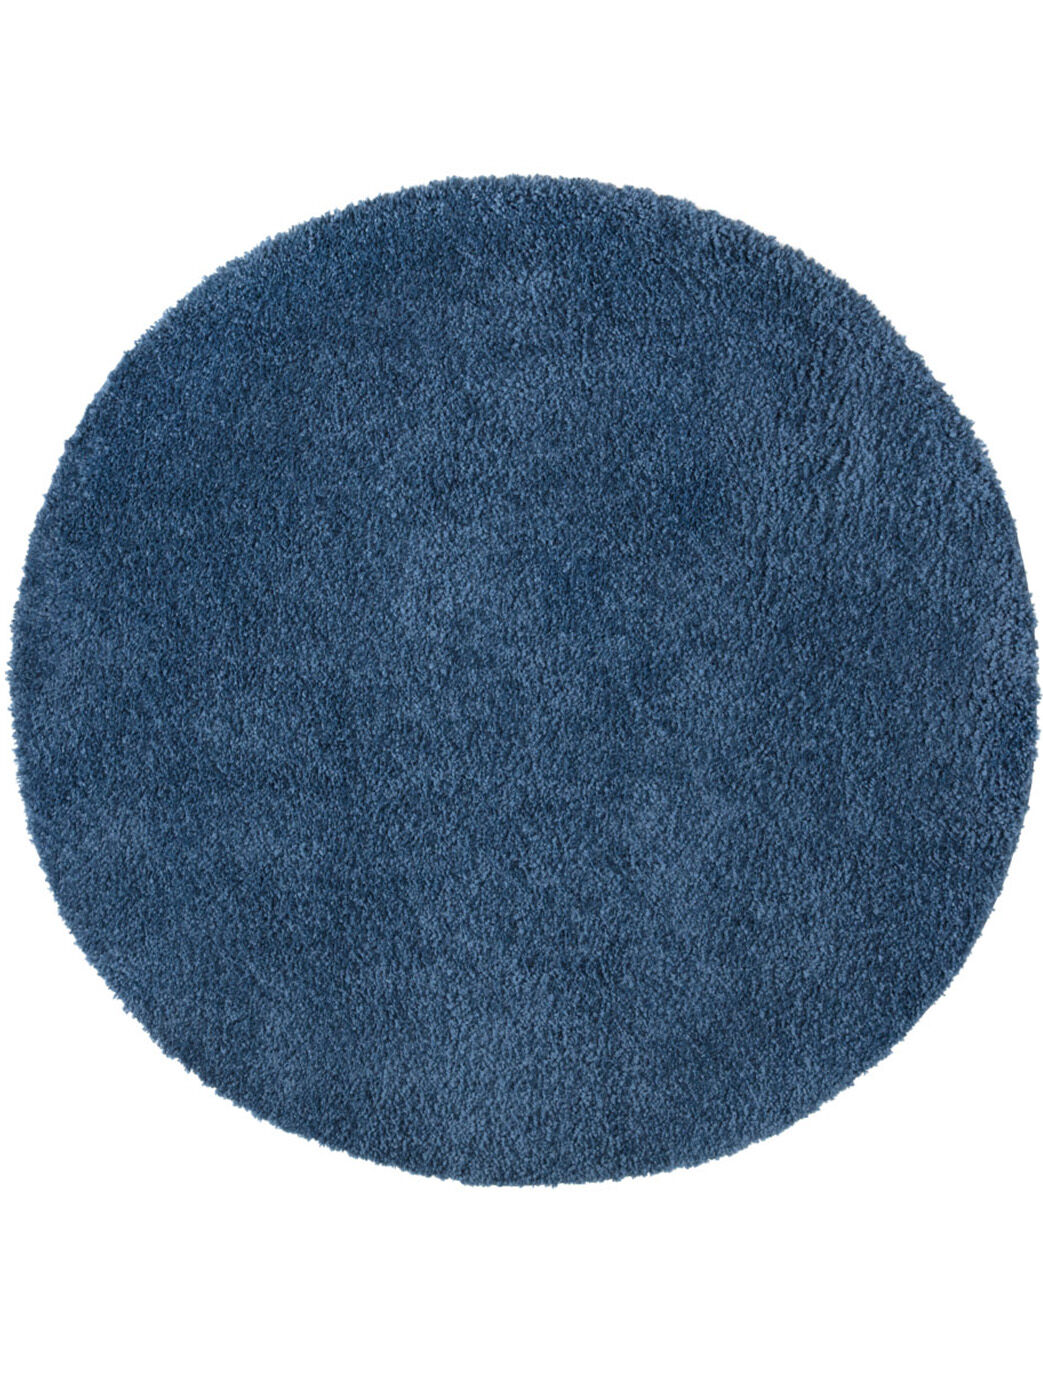 Hochflor Teppich Blau 160x160 1